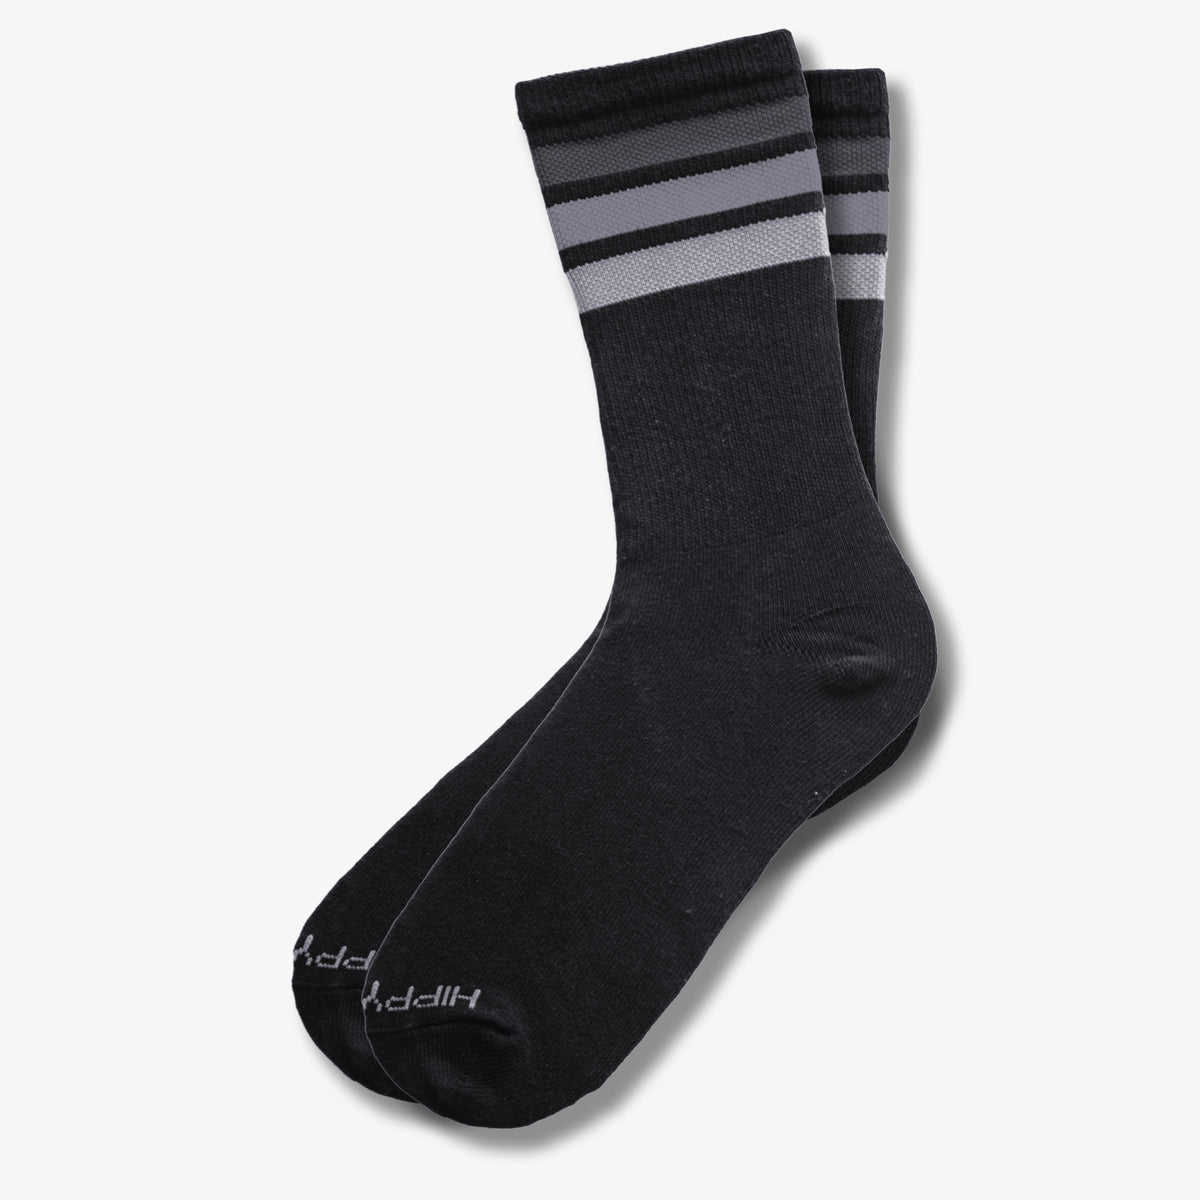 American Made 3-Stripe Black and Grey Crew Socks - Hippy Feet